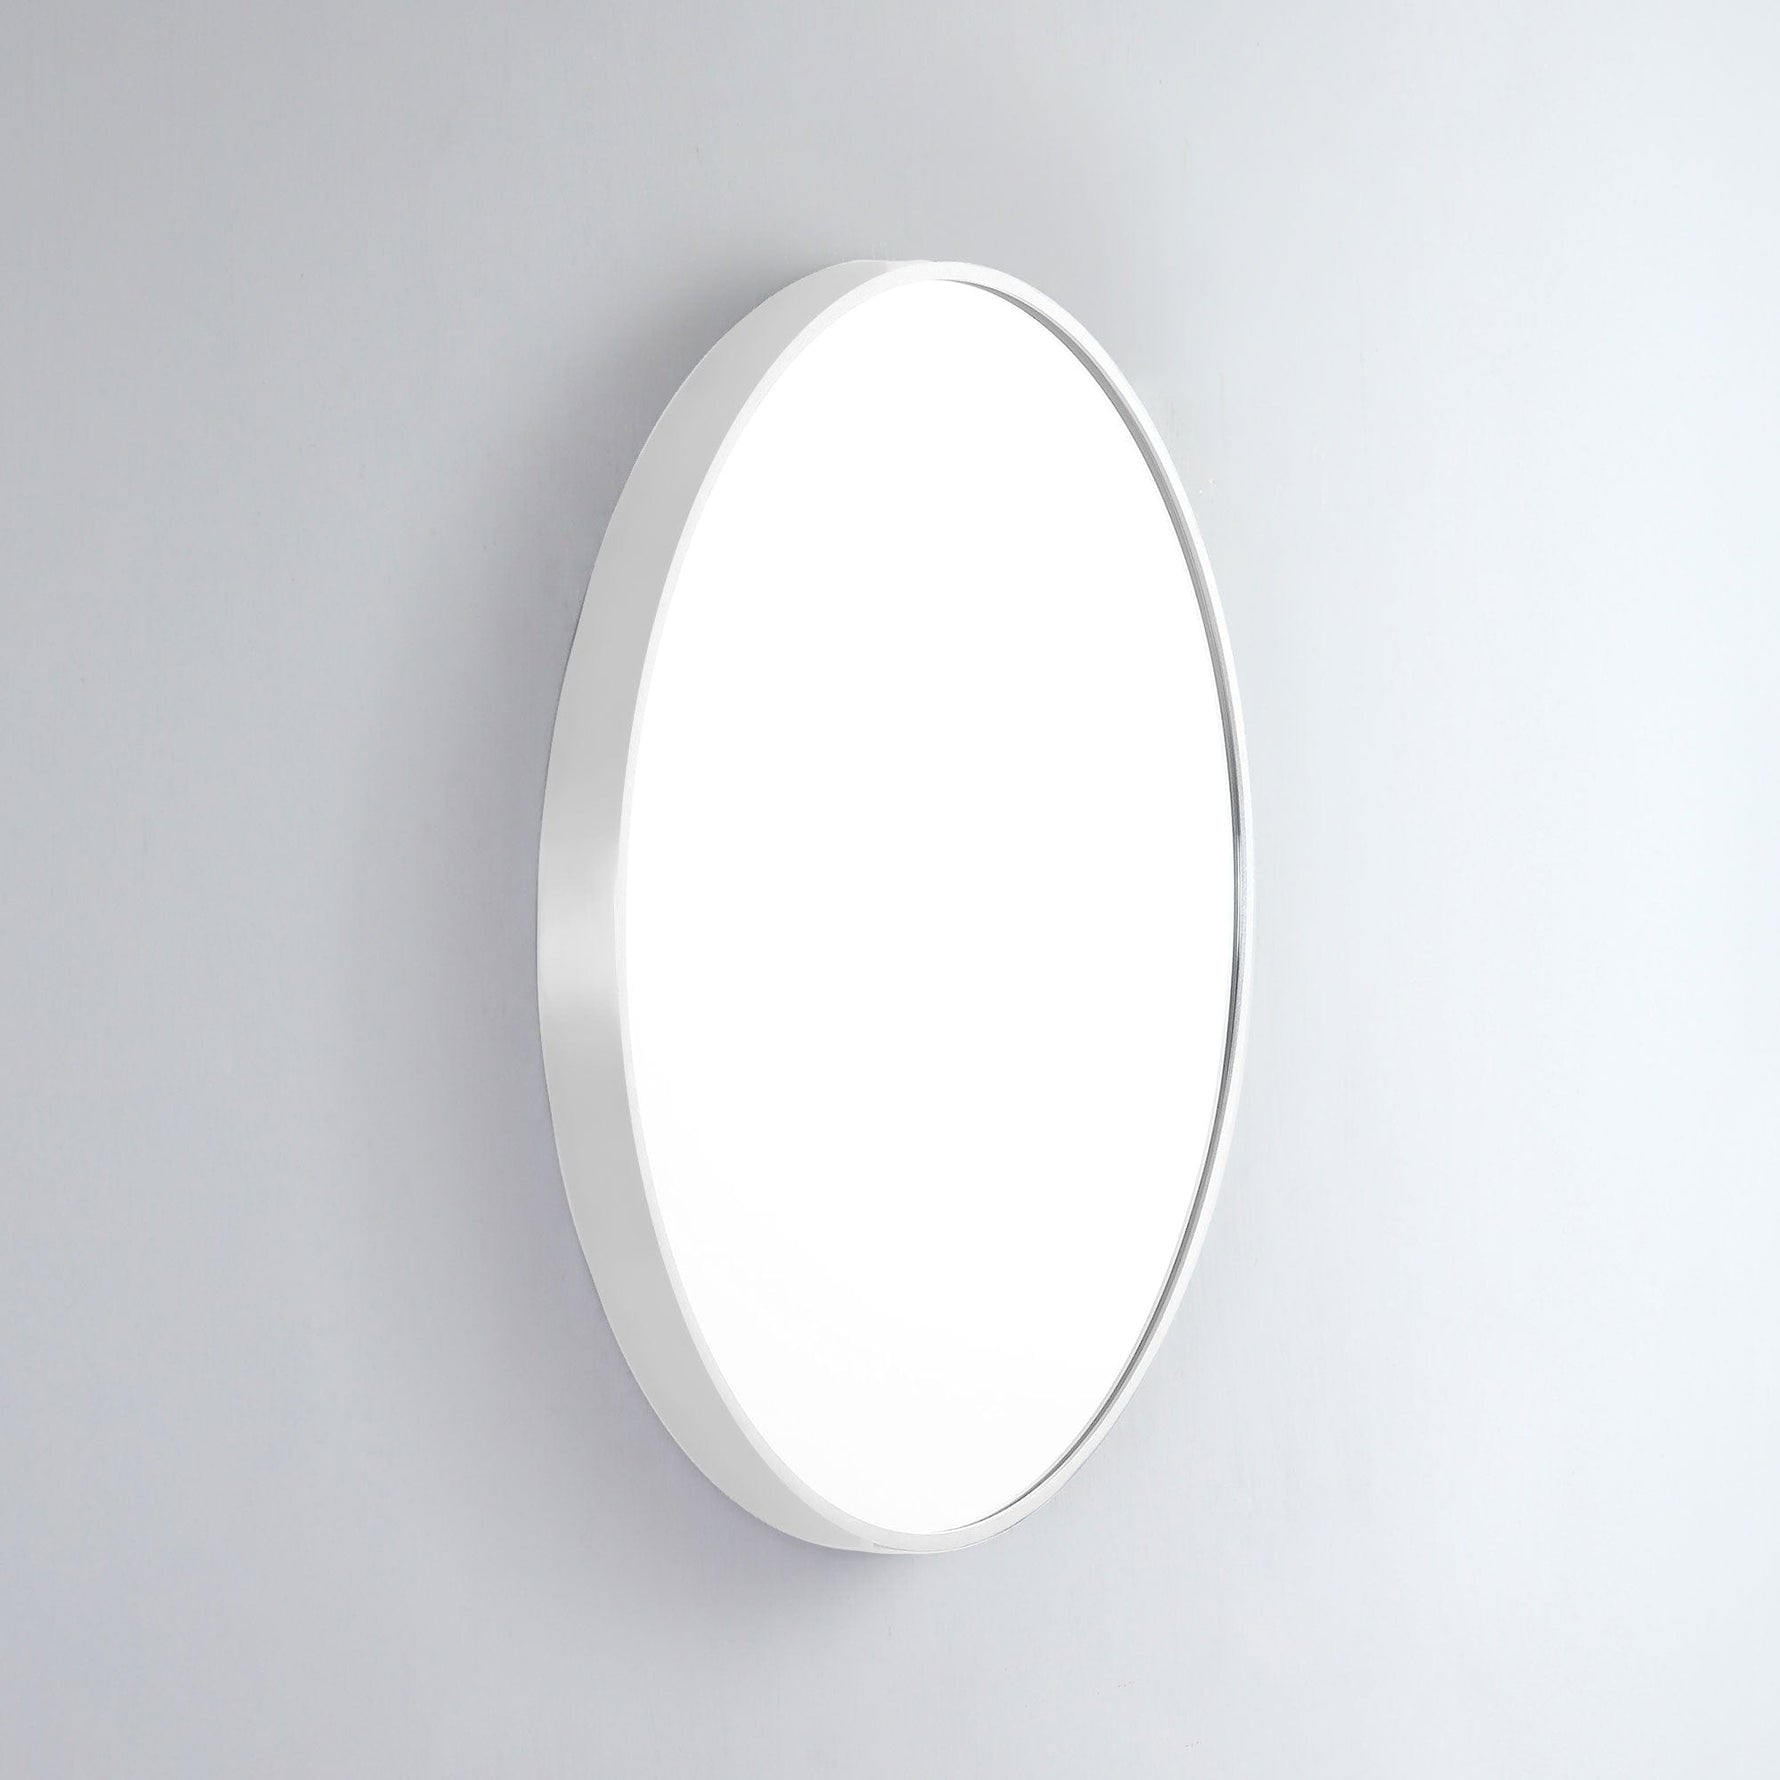 Remer Remer Modern Round Wall Mirror - Lowest Price Guarantee 61cm x 61cm / Matte White MR61-MW